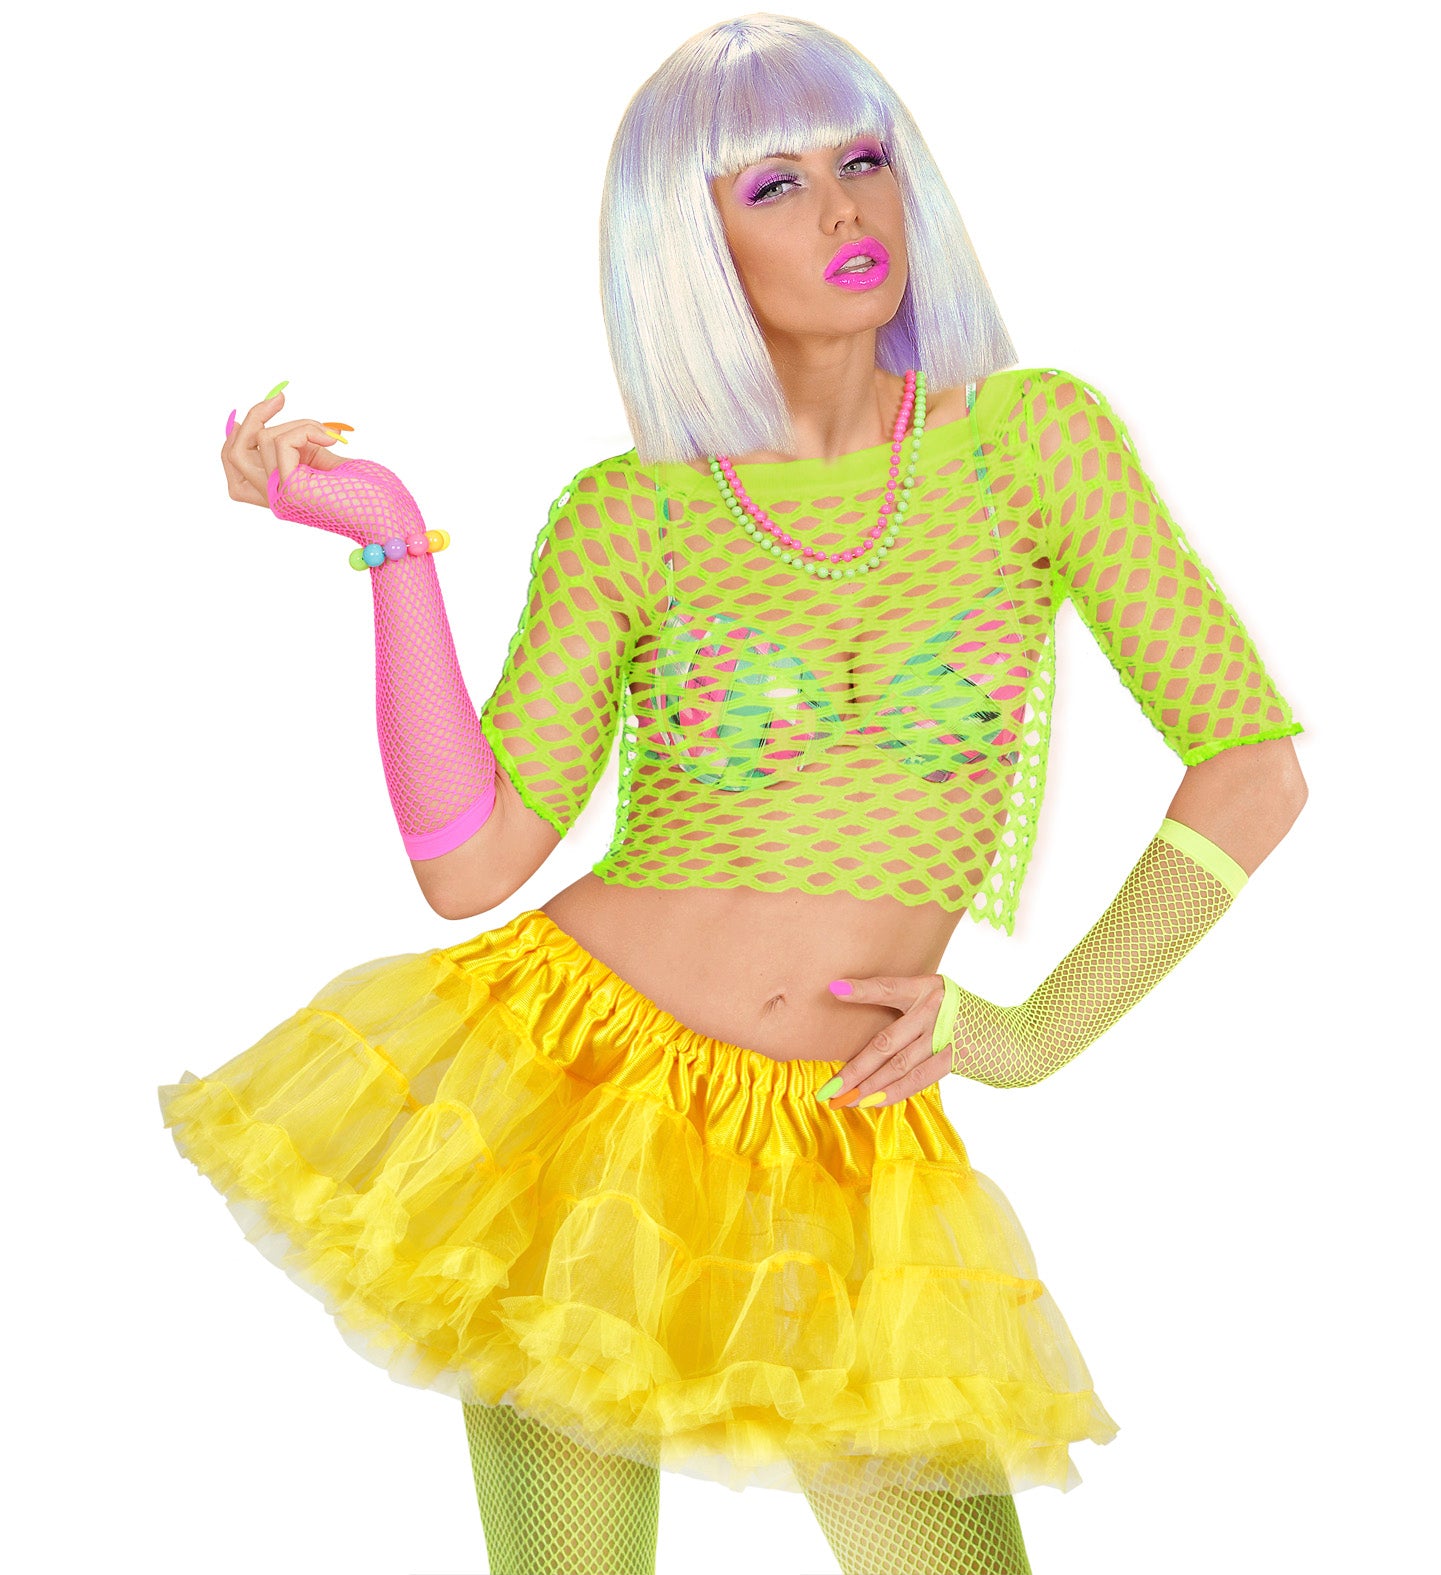 Ruffle Tutu Neon Yellow 80's costume accessory